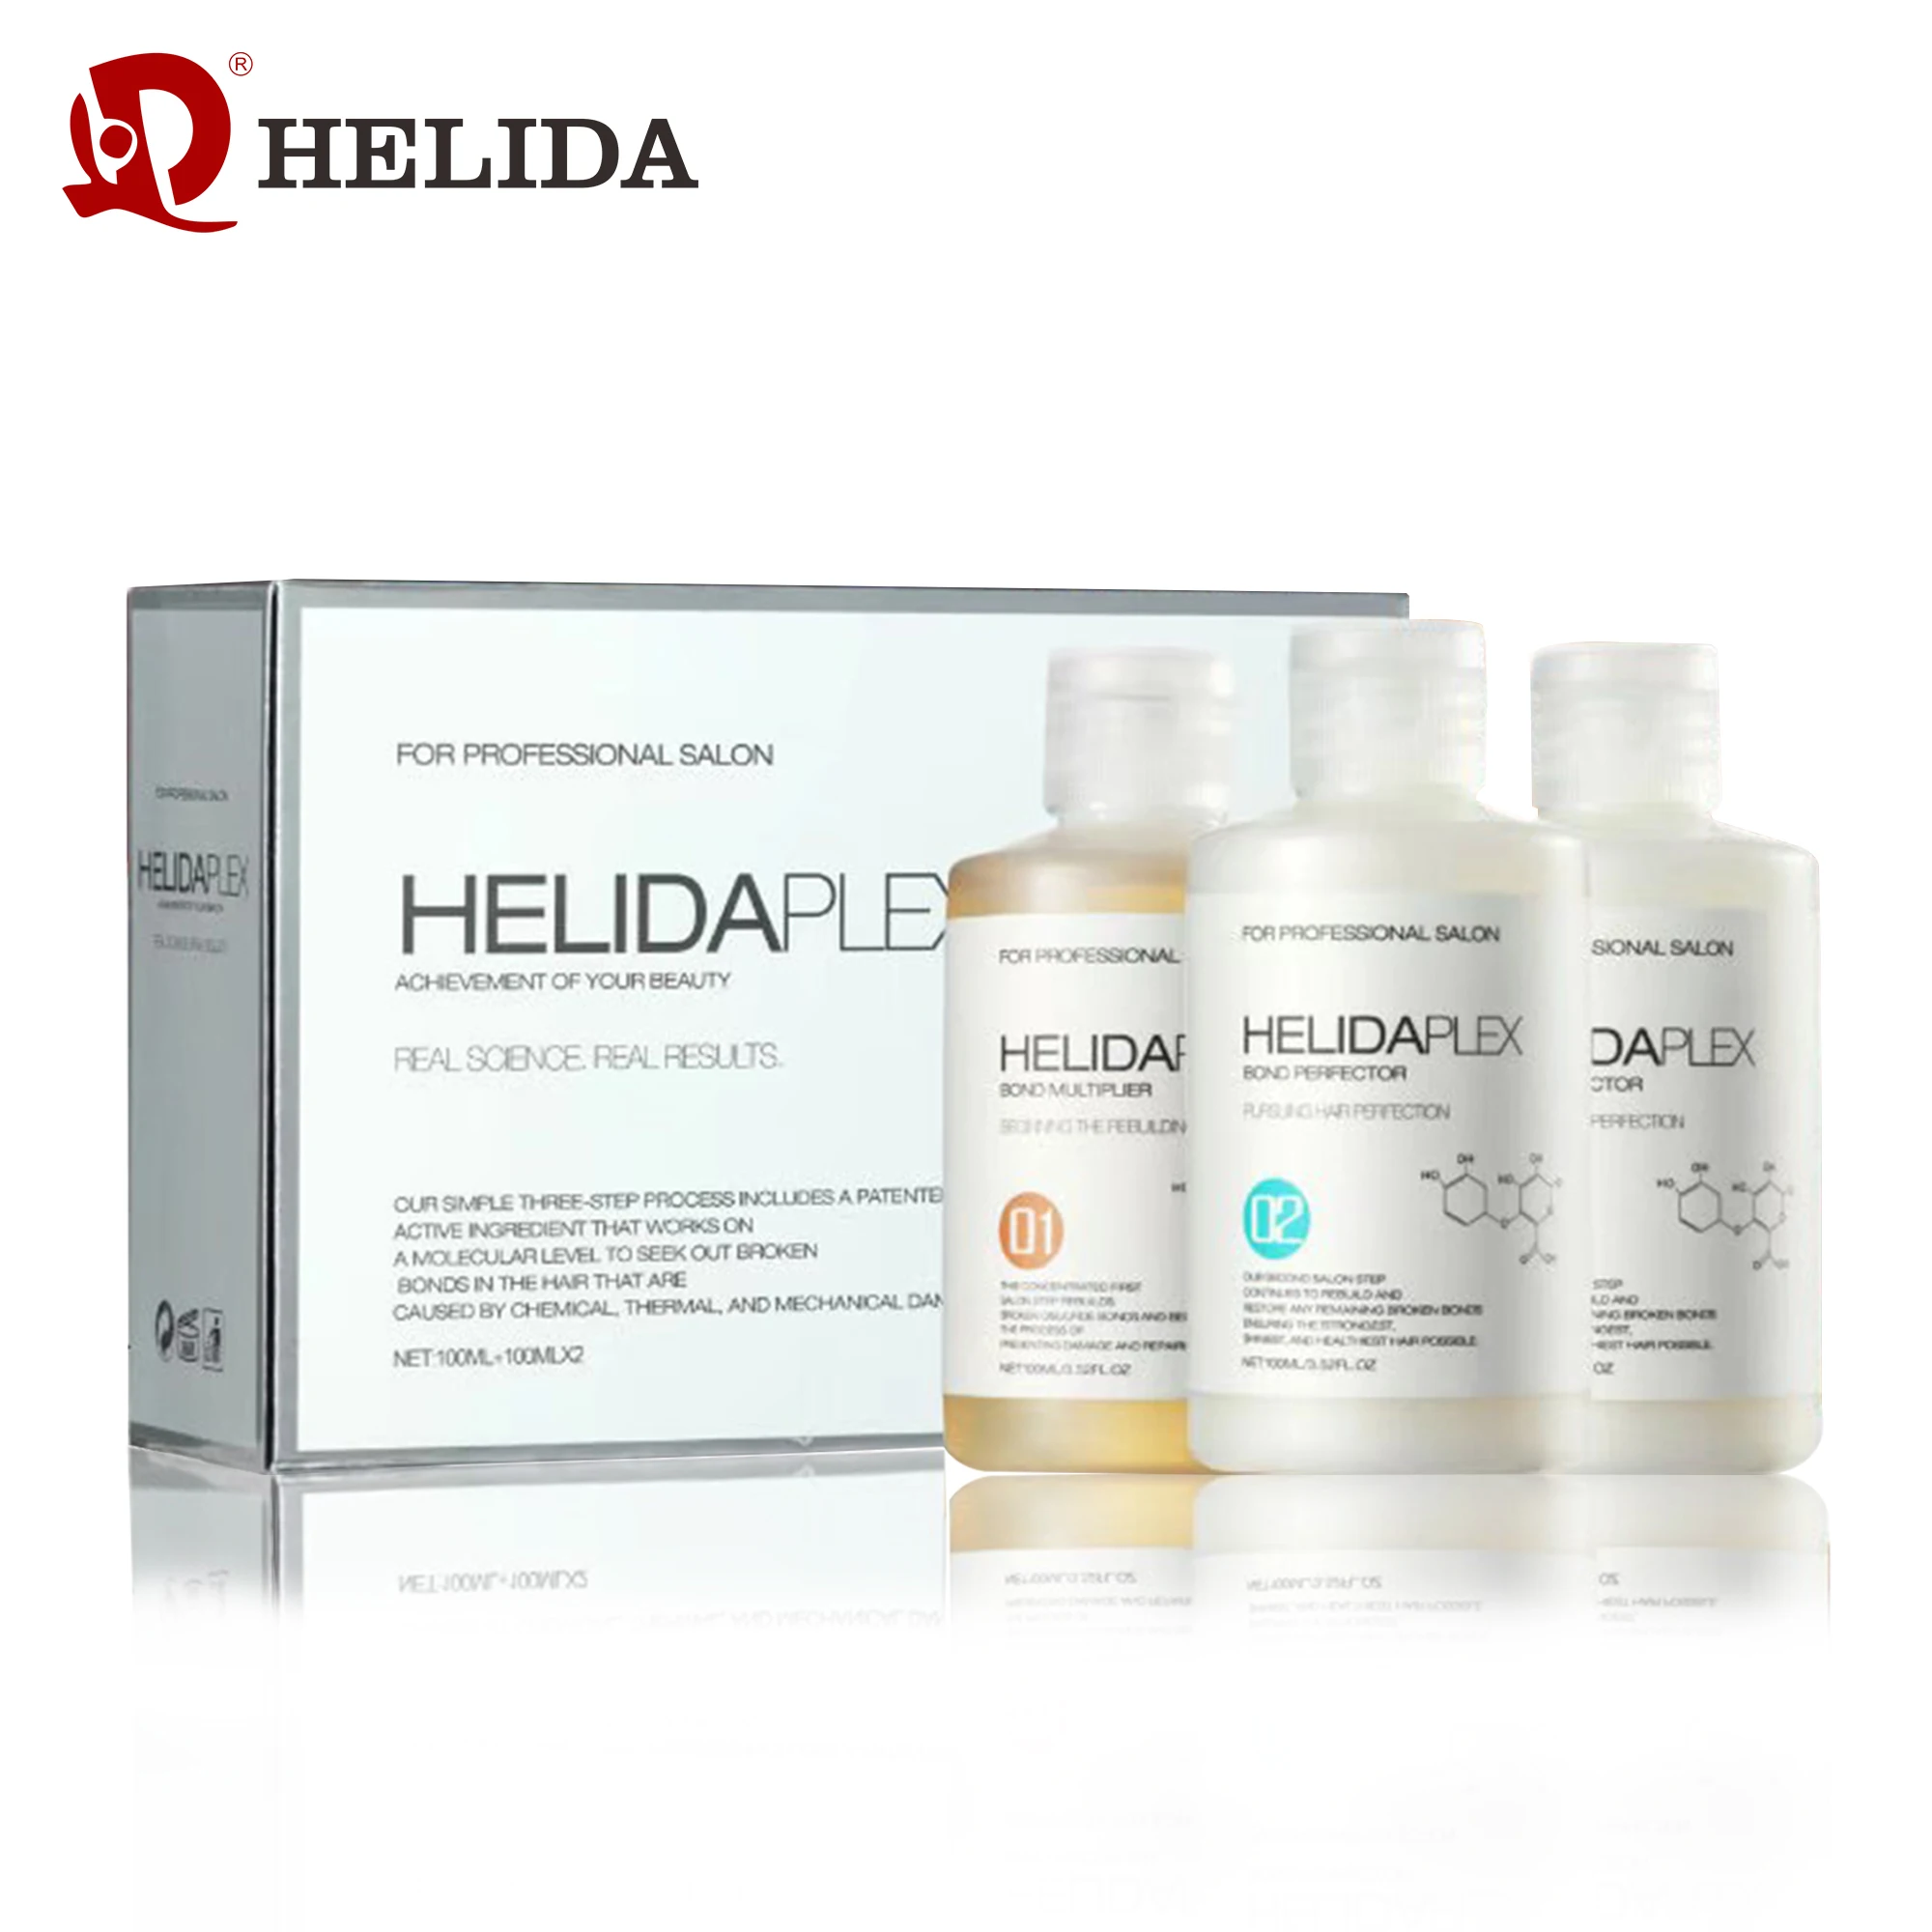 Helida Treatment For All Broken Hairs Ola Plex  Ola Plex *2 100ml*3 Hair  Plex - Buy Treatment For All Broken Hairs,Hair Treatment,Hair Plex Product  on 